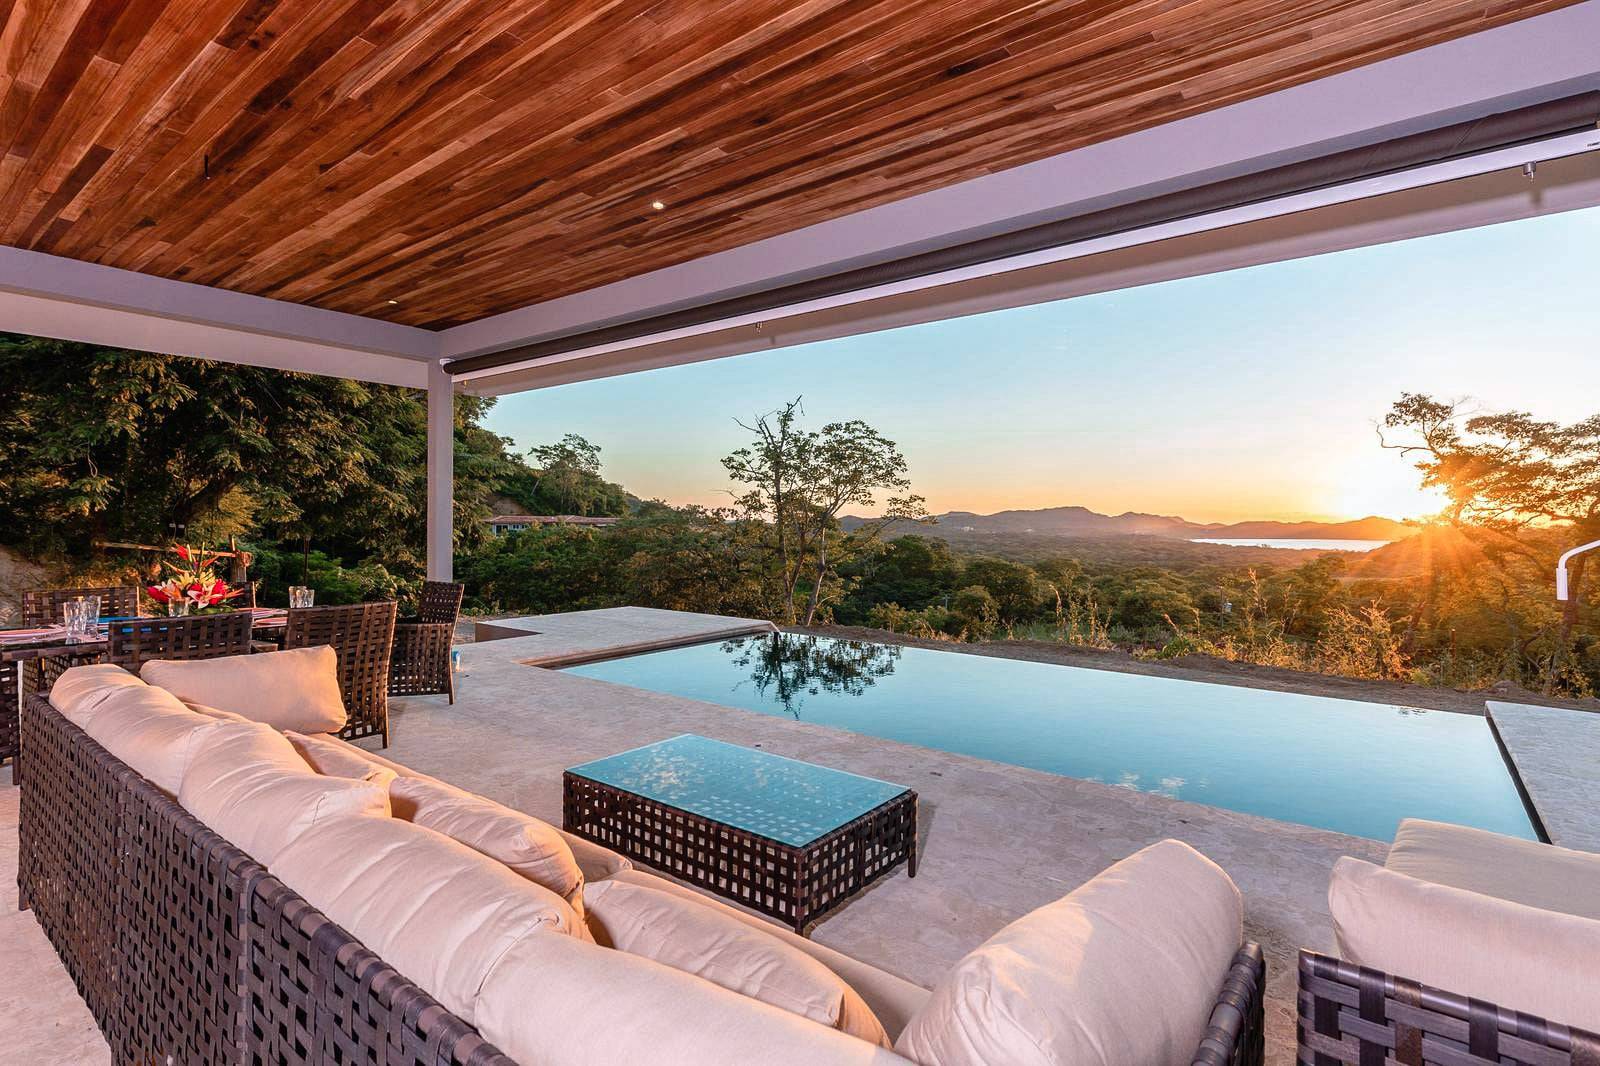 Blue Water luxury vacation rentals in Costa Rica